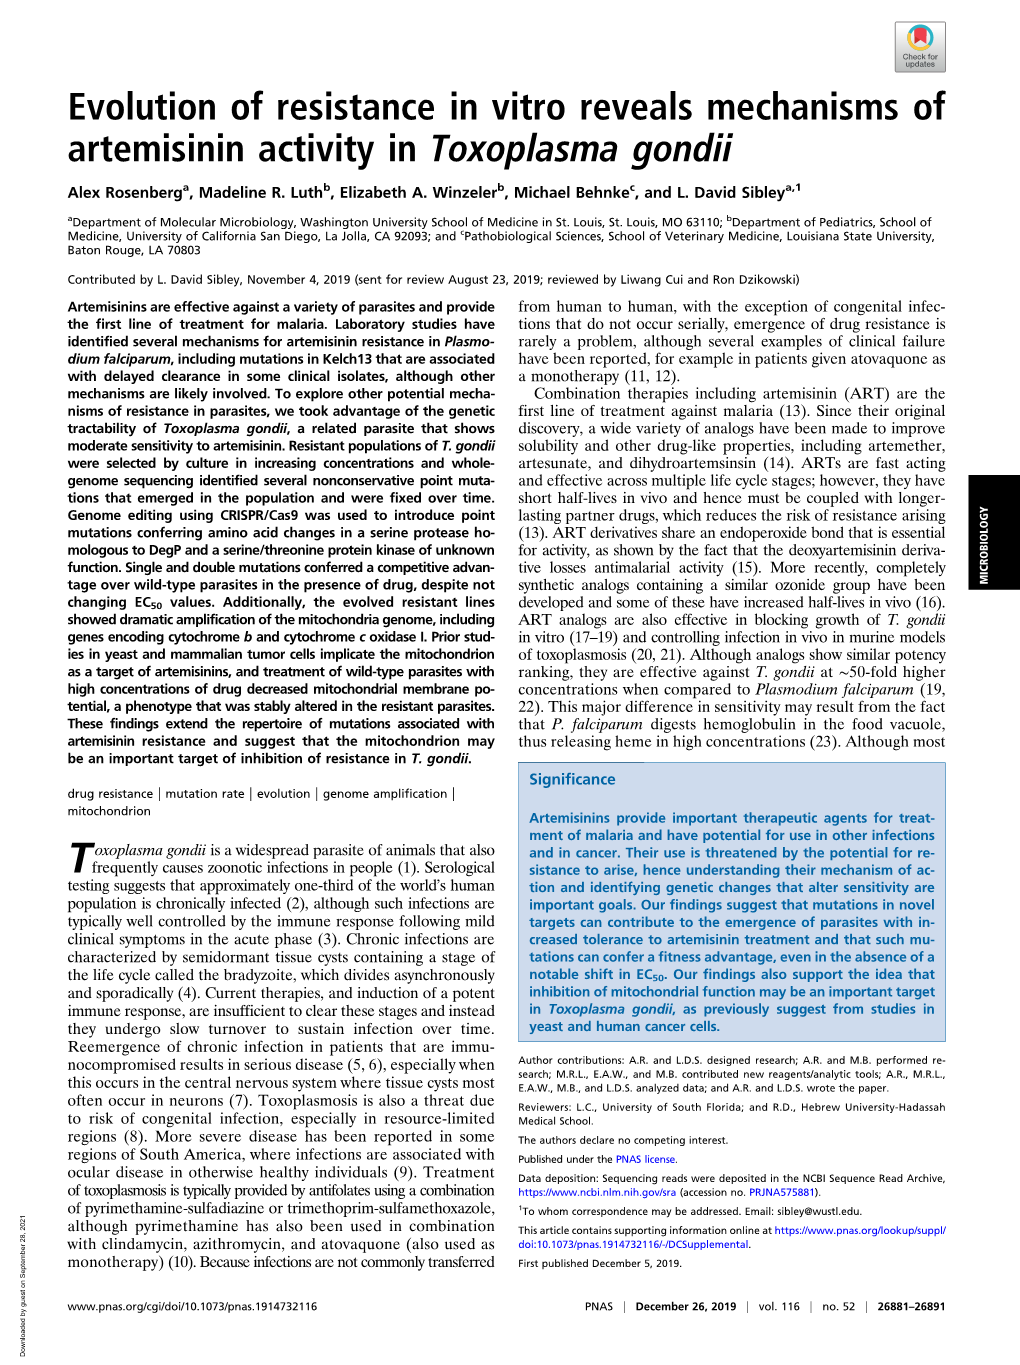 Evolution of Resistance in Vitro Reveals Mechanisms of Artemisinin Activity in Toxoplasma Gondii